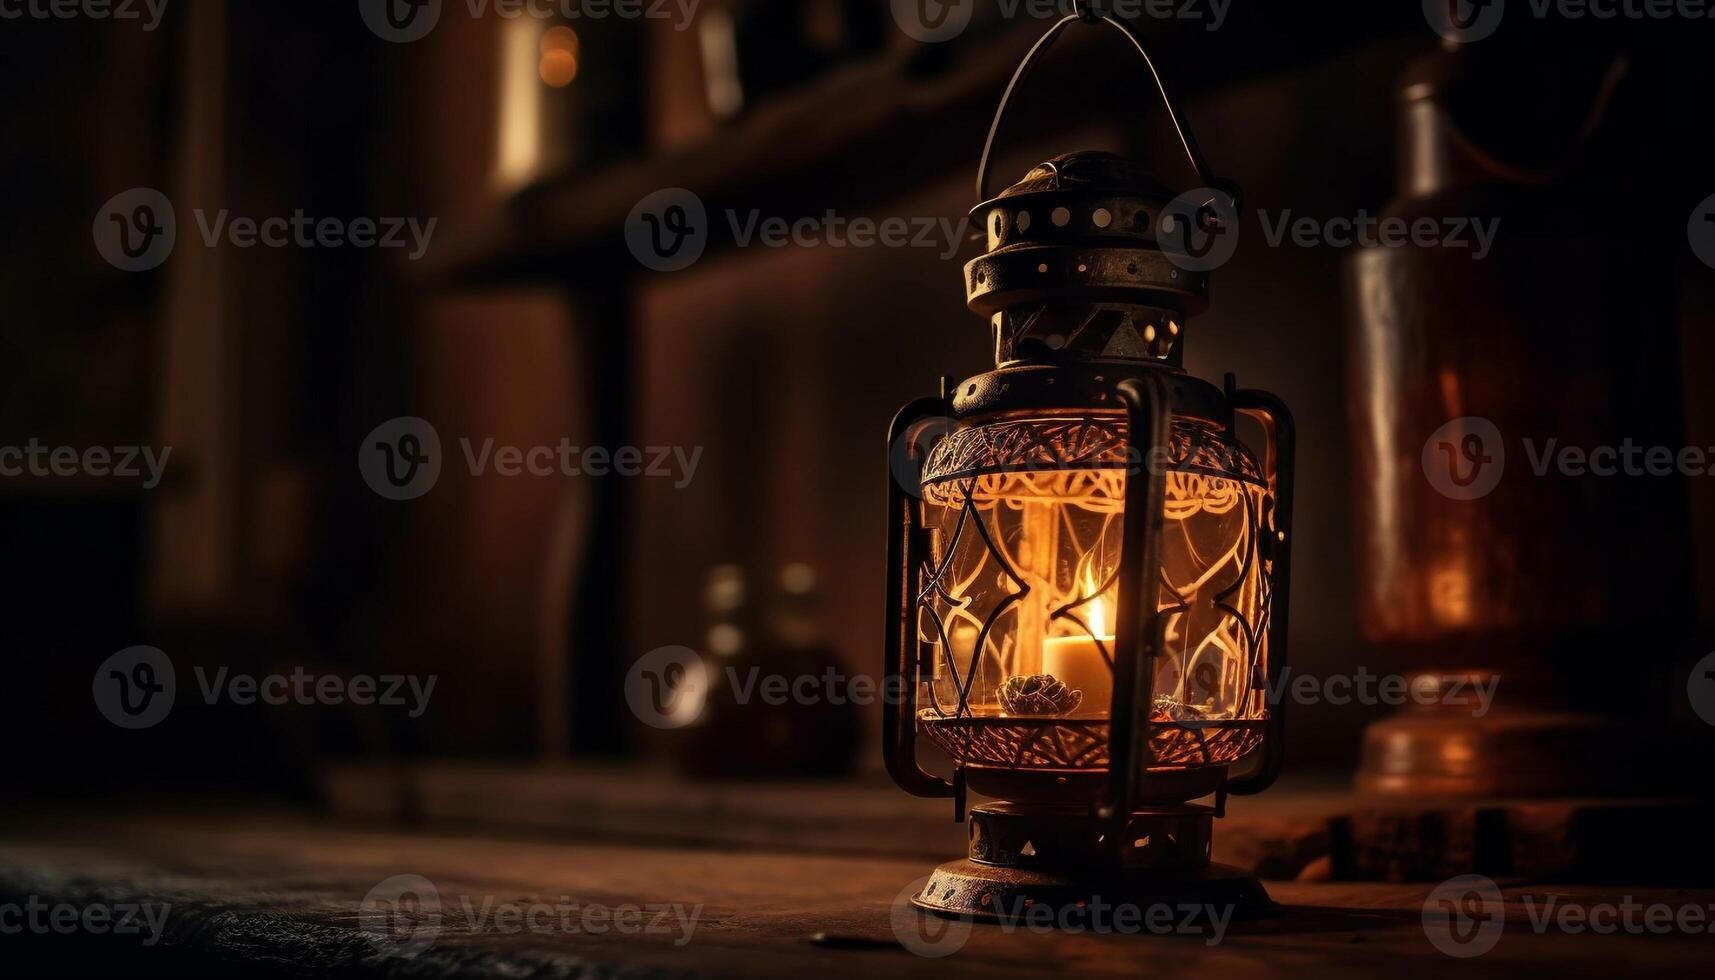 Antique lantern illuminated rustic table, glowing celebration decoration generated by AI photo